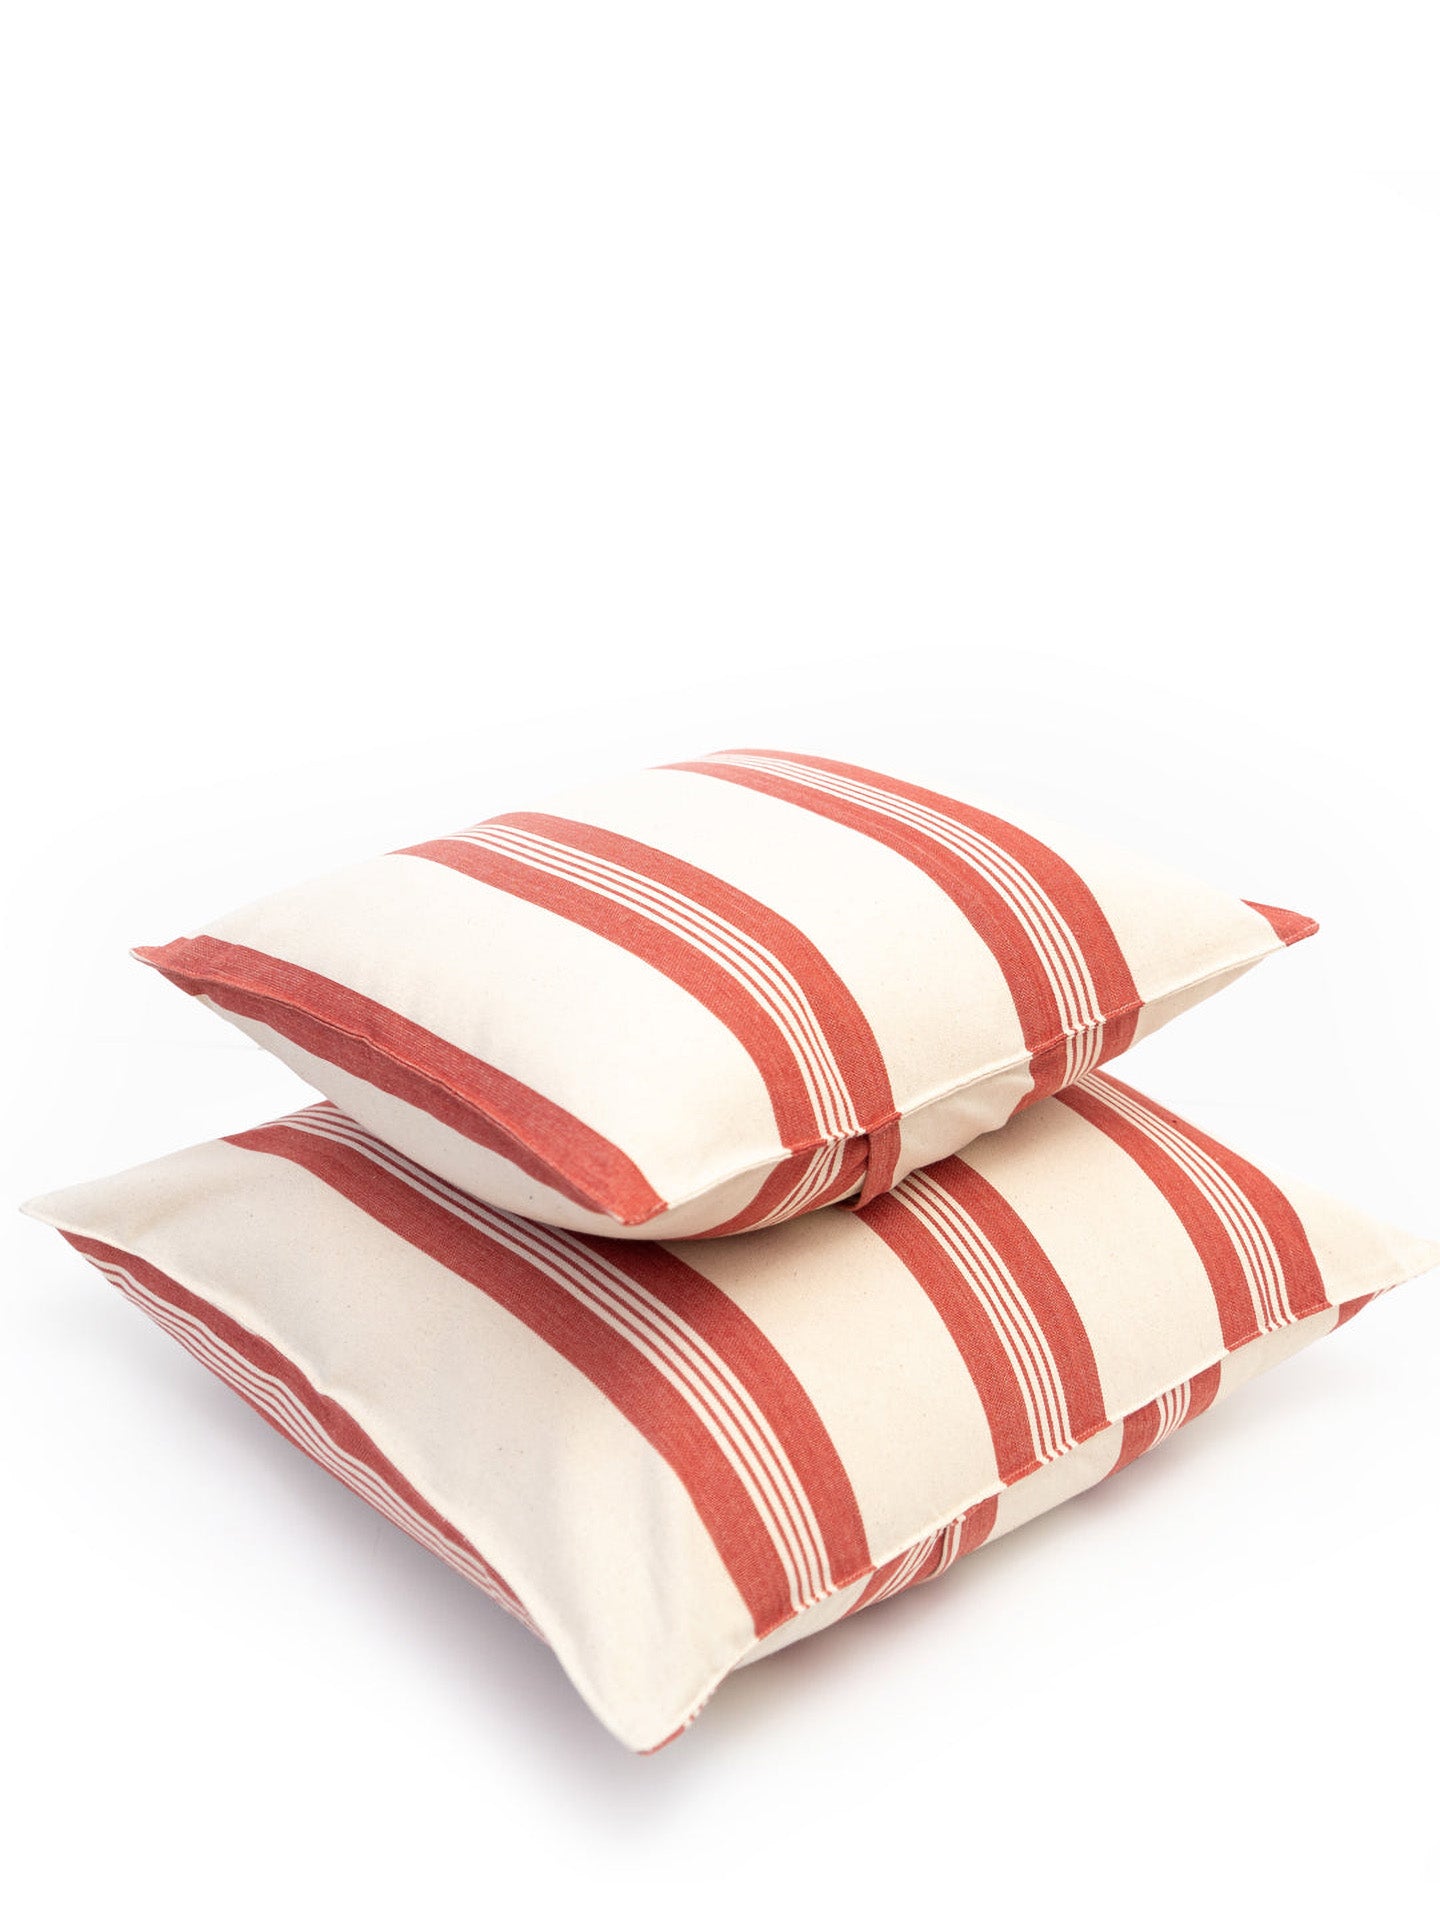 Cushion cover no 5 red stripes, 50 x 50 cm